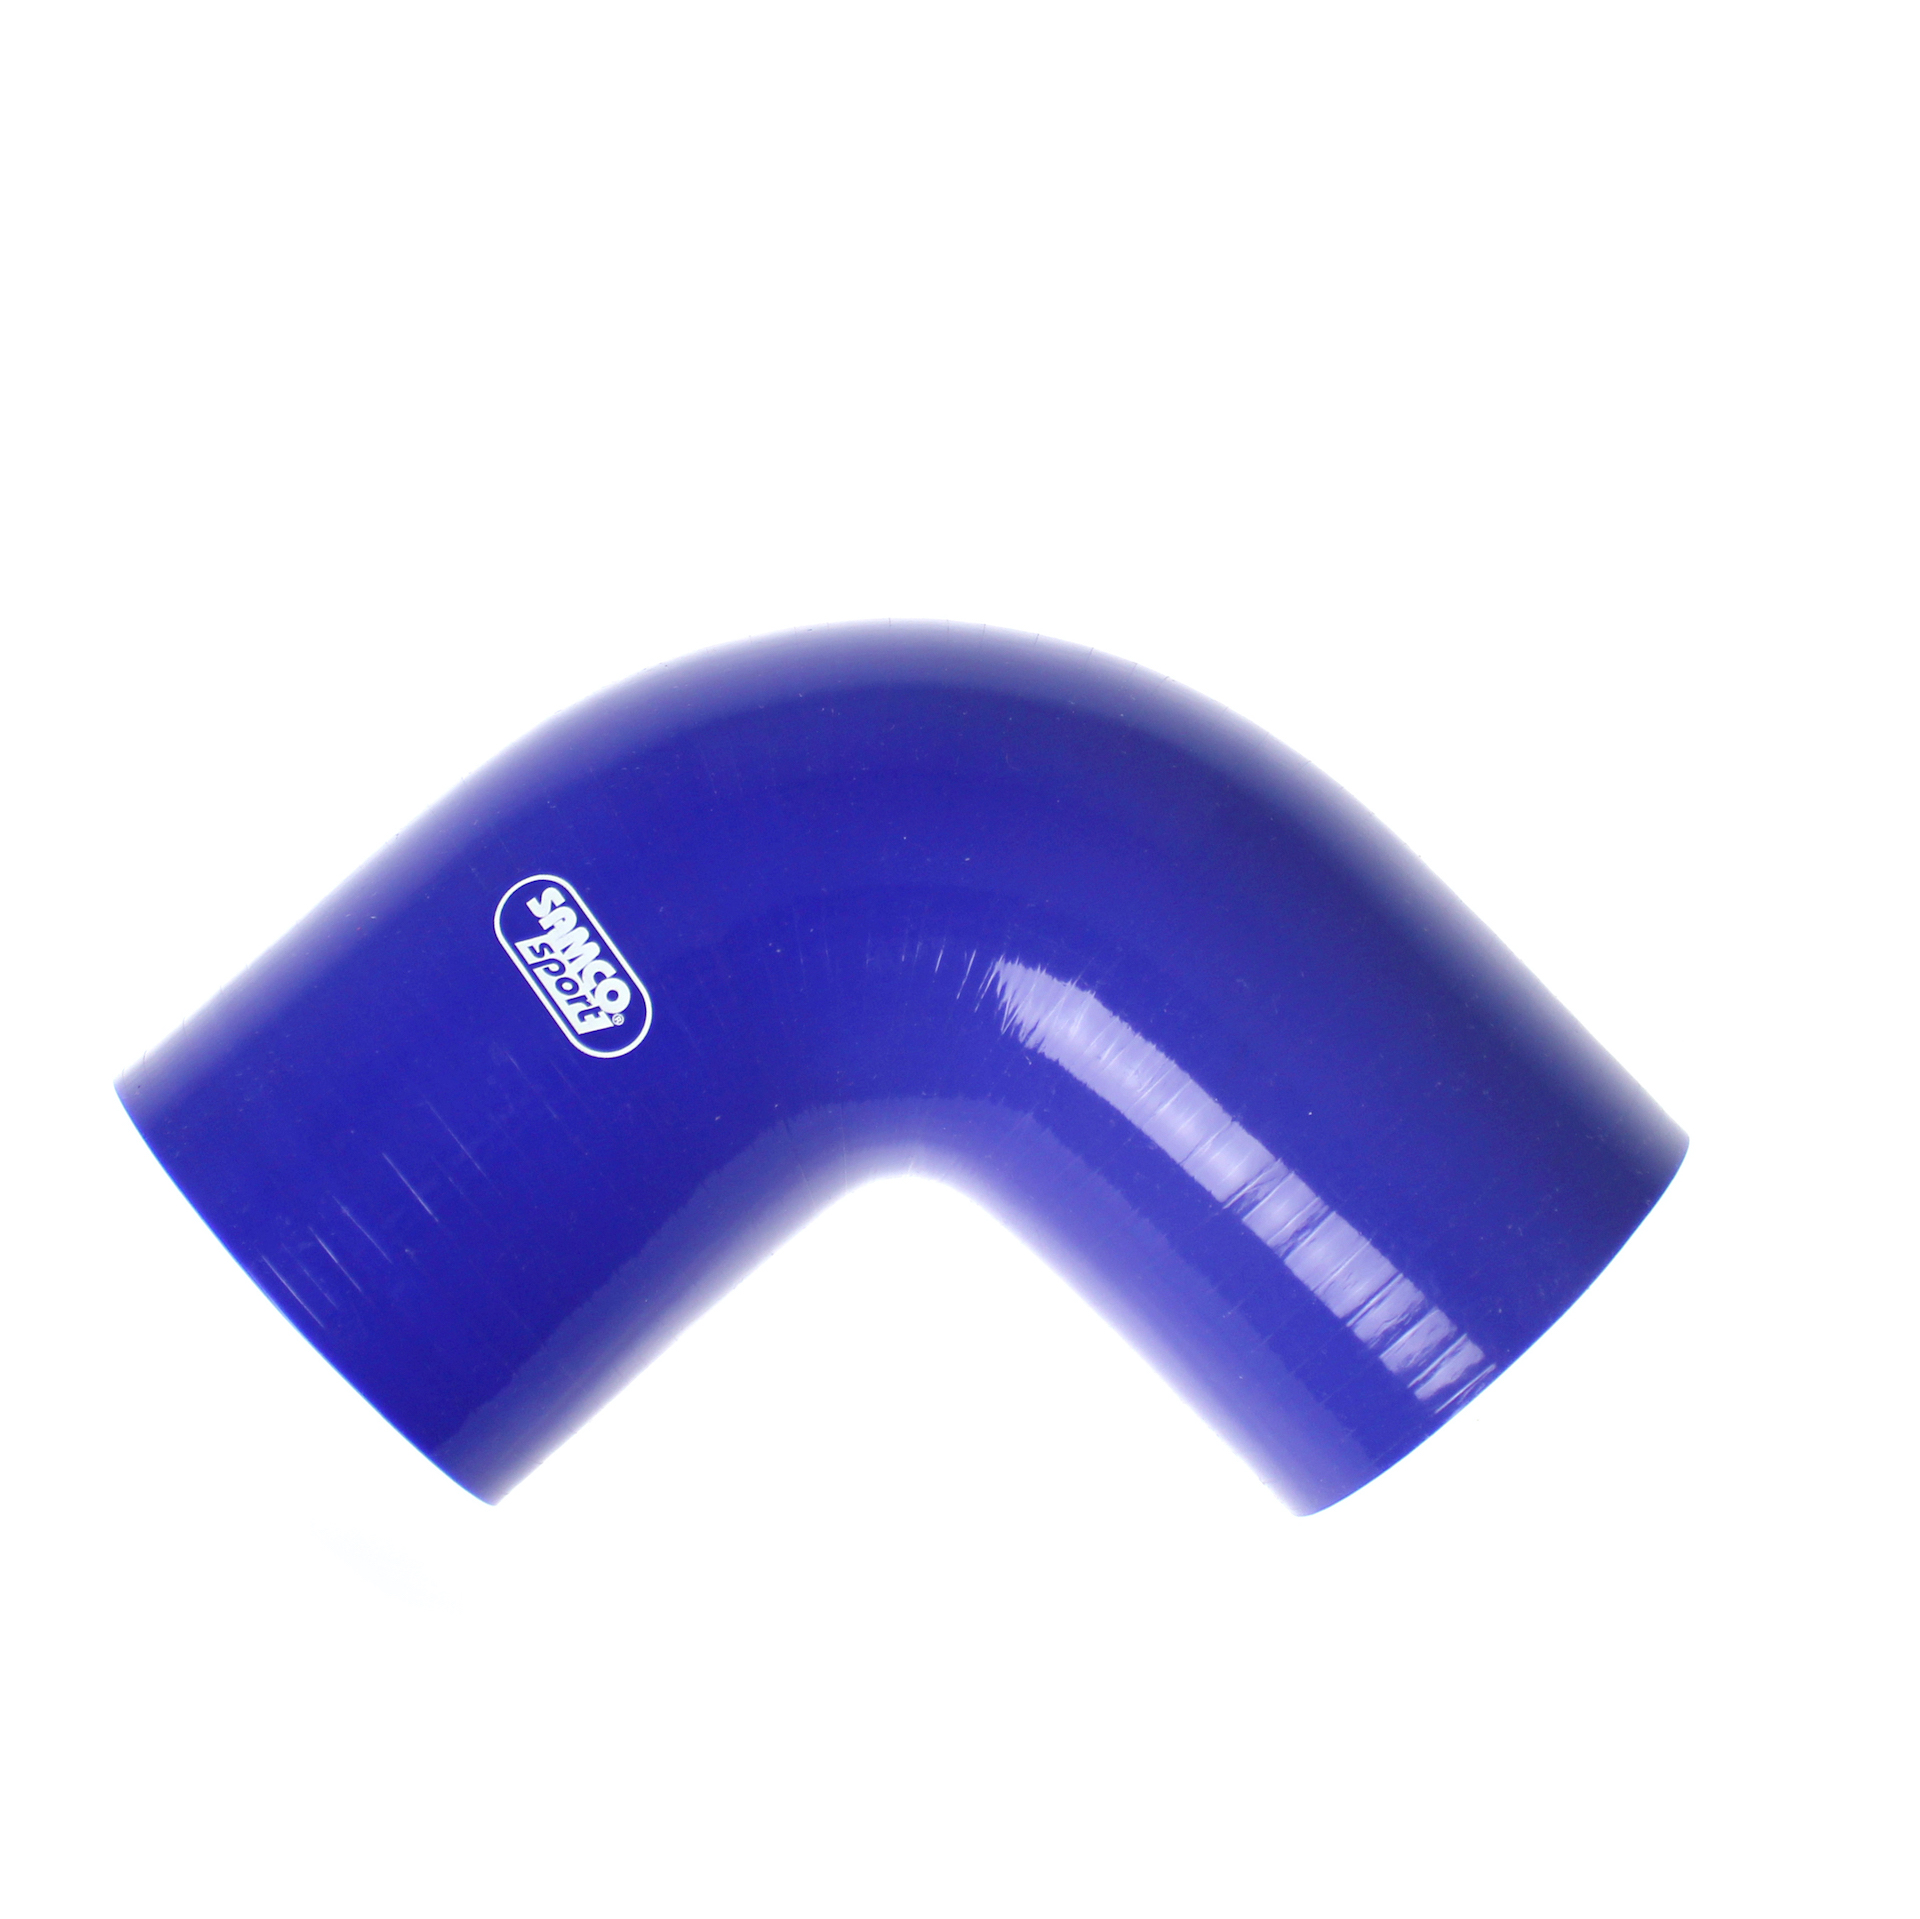 Ø 102mm Siliconhose 90° Elbow / Connector (Blue) Hose, Arlows